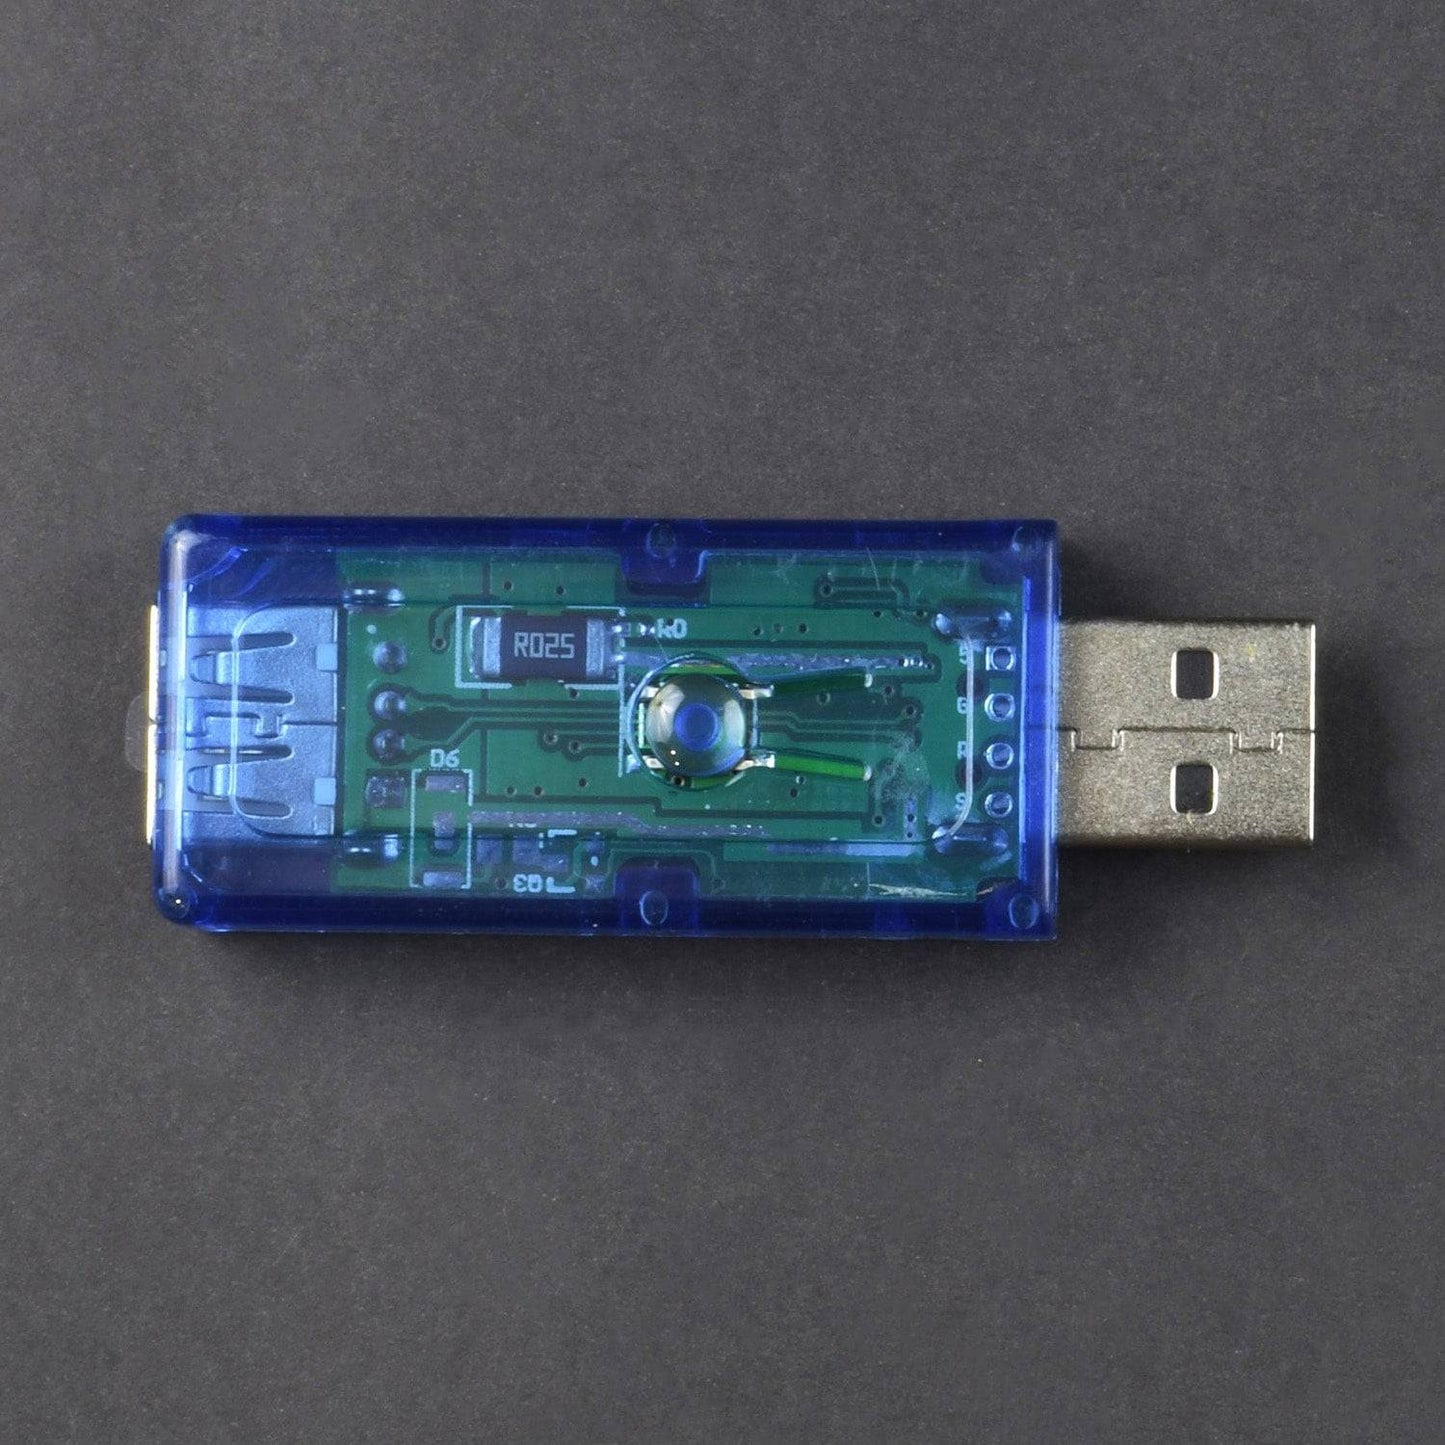 0.91" OLED USB Detector Voltmeter Ammeter Power Capacity Tester Meter -NA288 - REES52